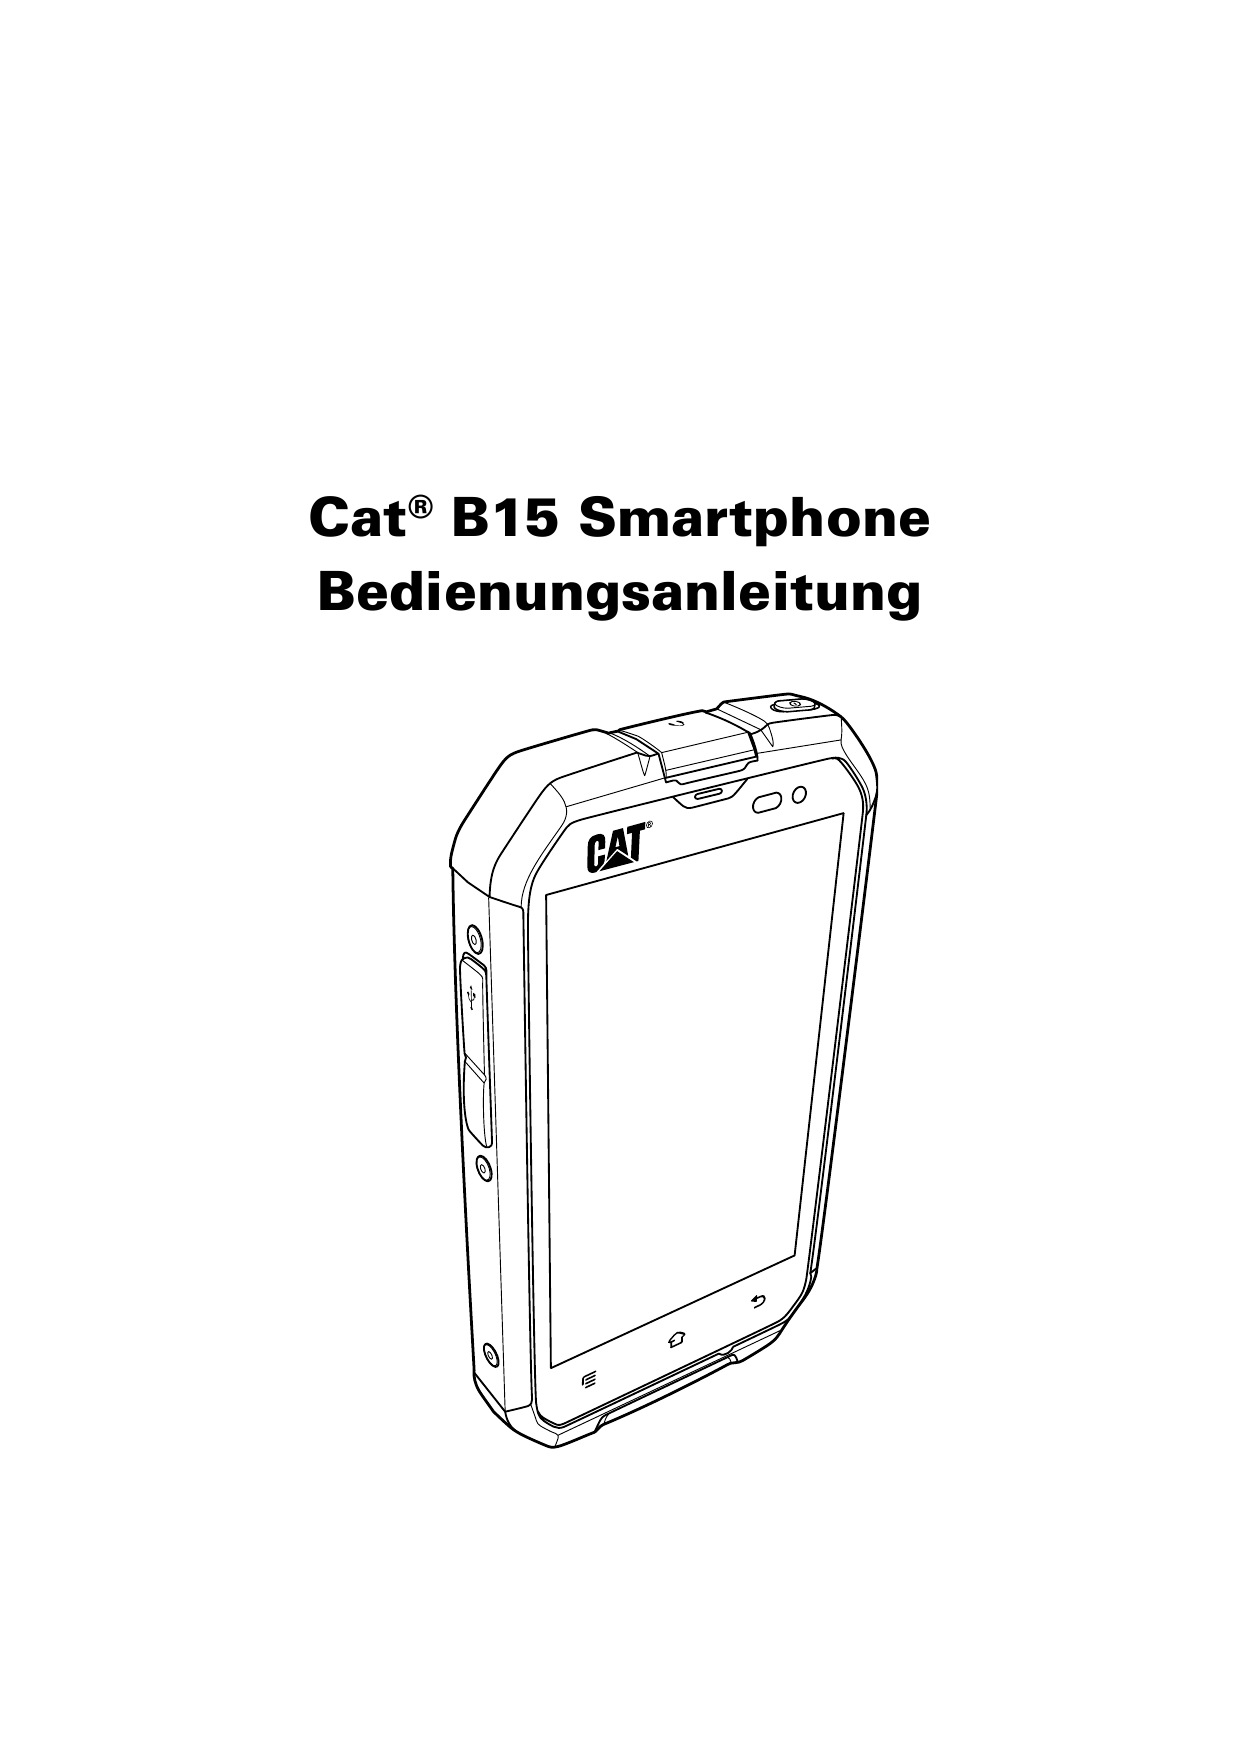 Cat® B15 SmartphoneBedienungsanleitung